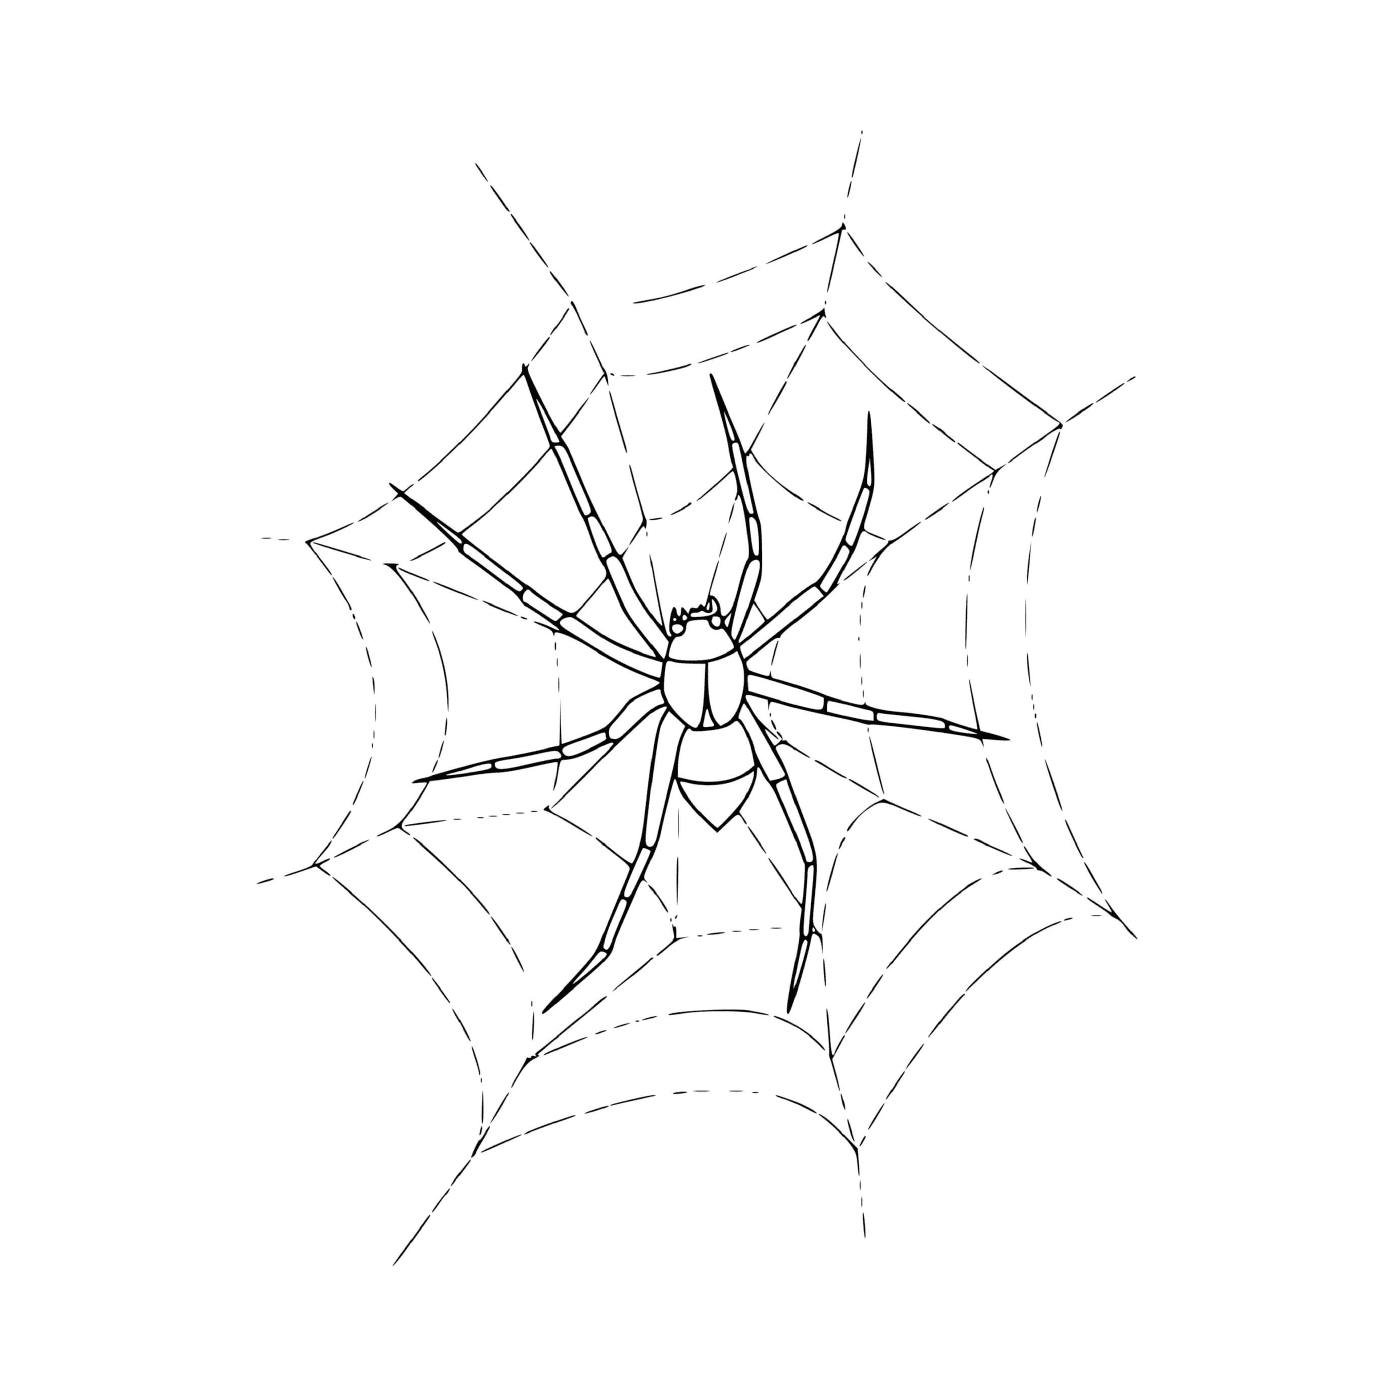  A spider sitting on a web 